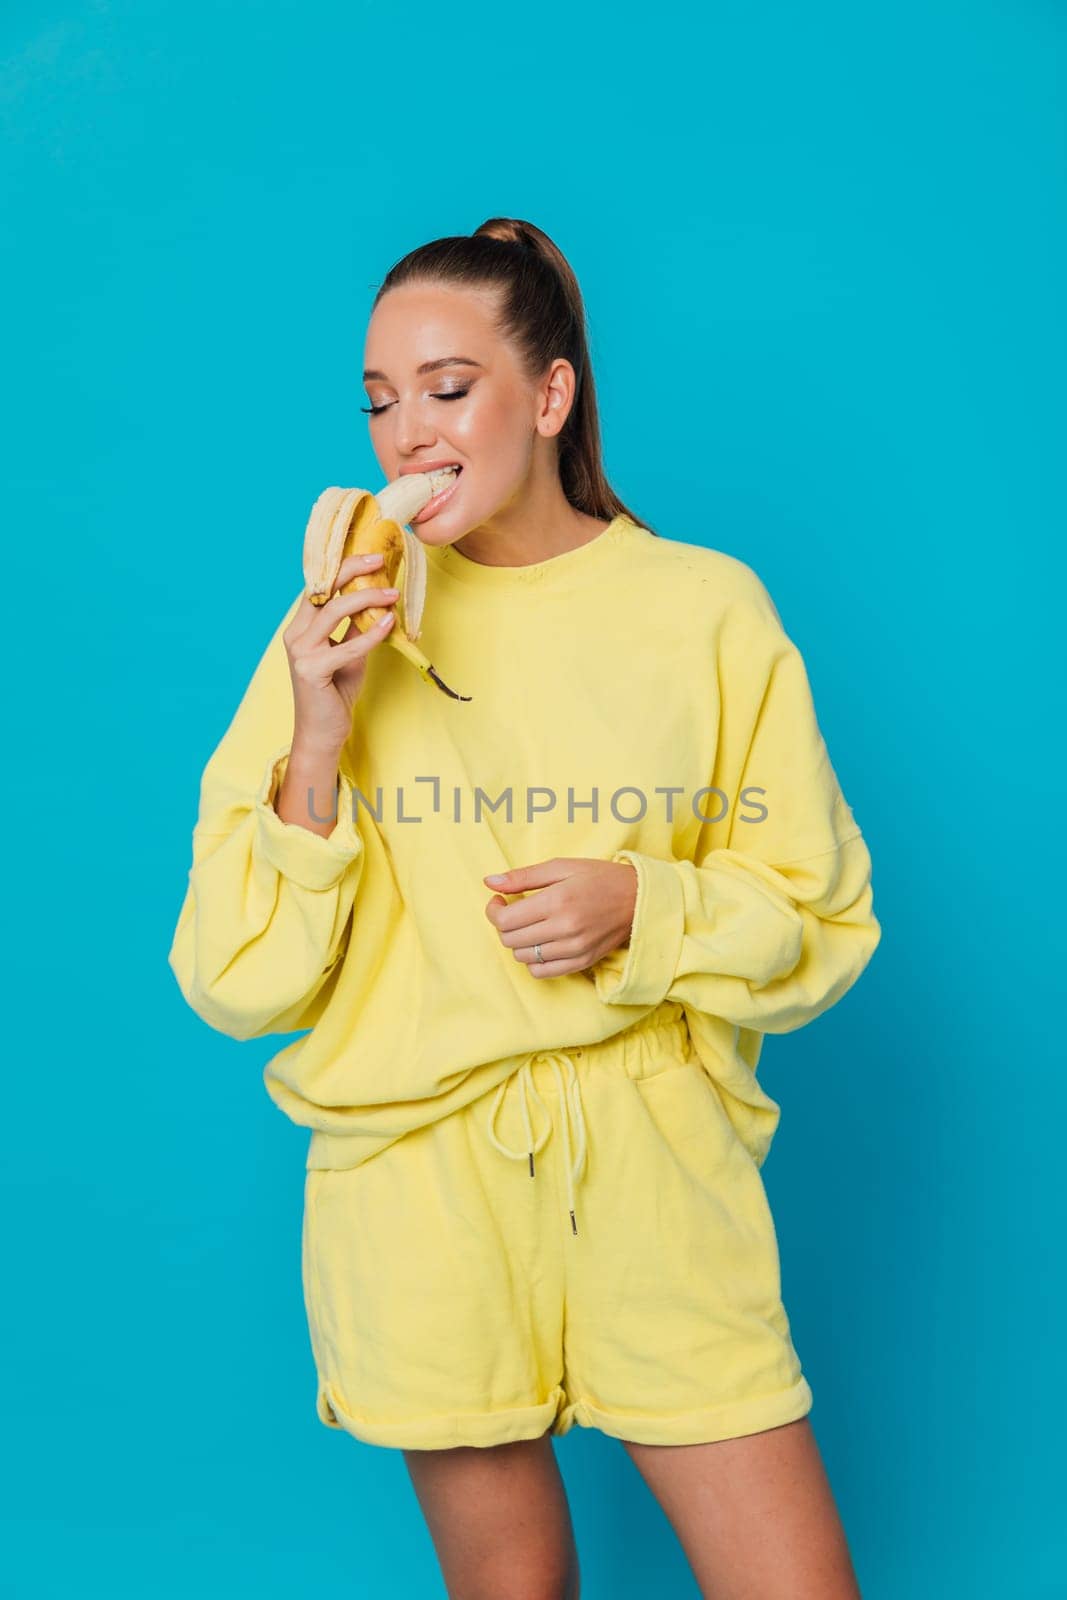 woman in yellow clothes eats a banana